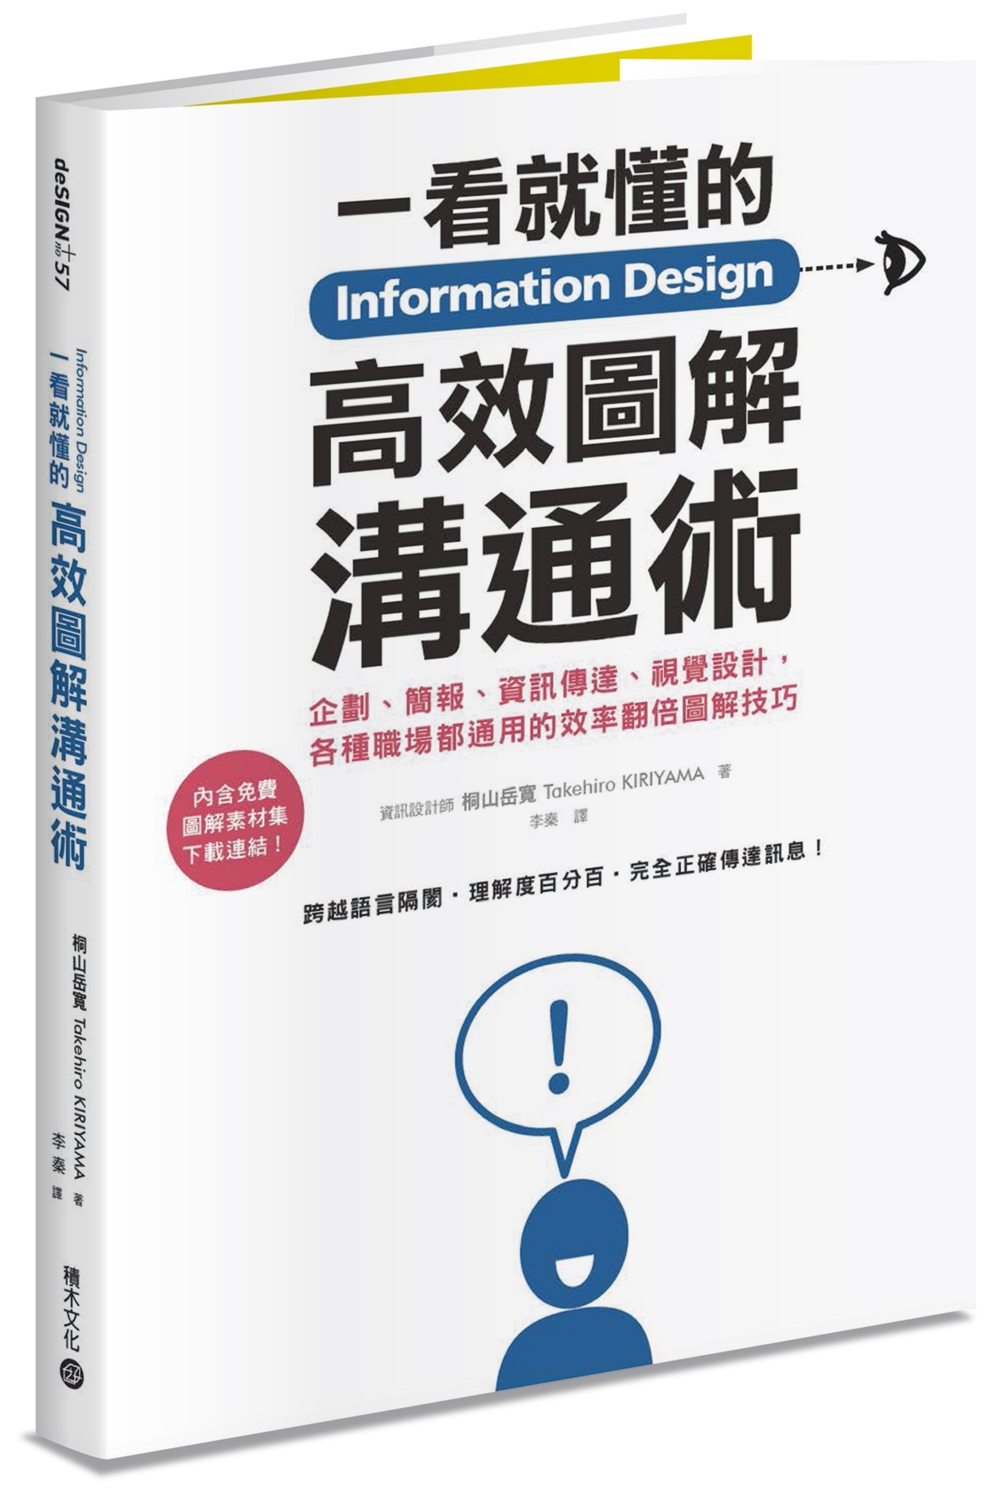 Information Design一看就懂的高效圖解溝通術...